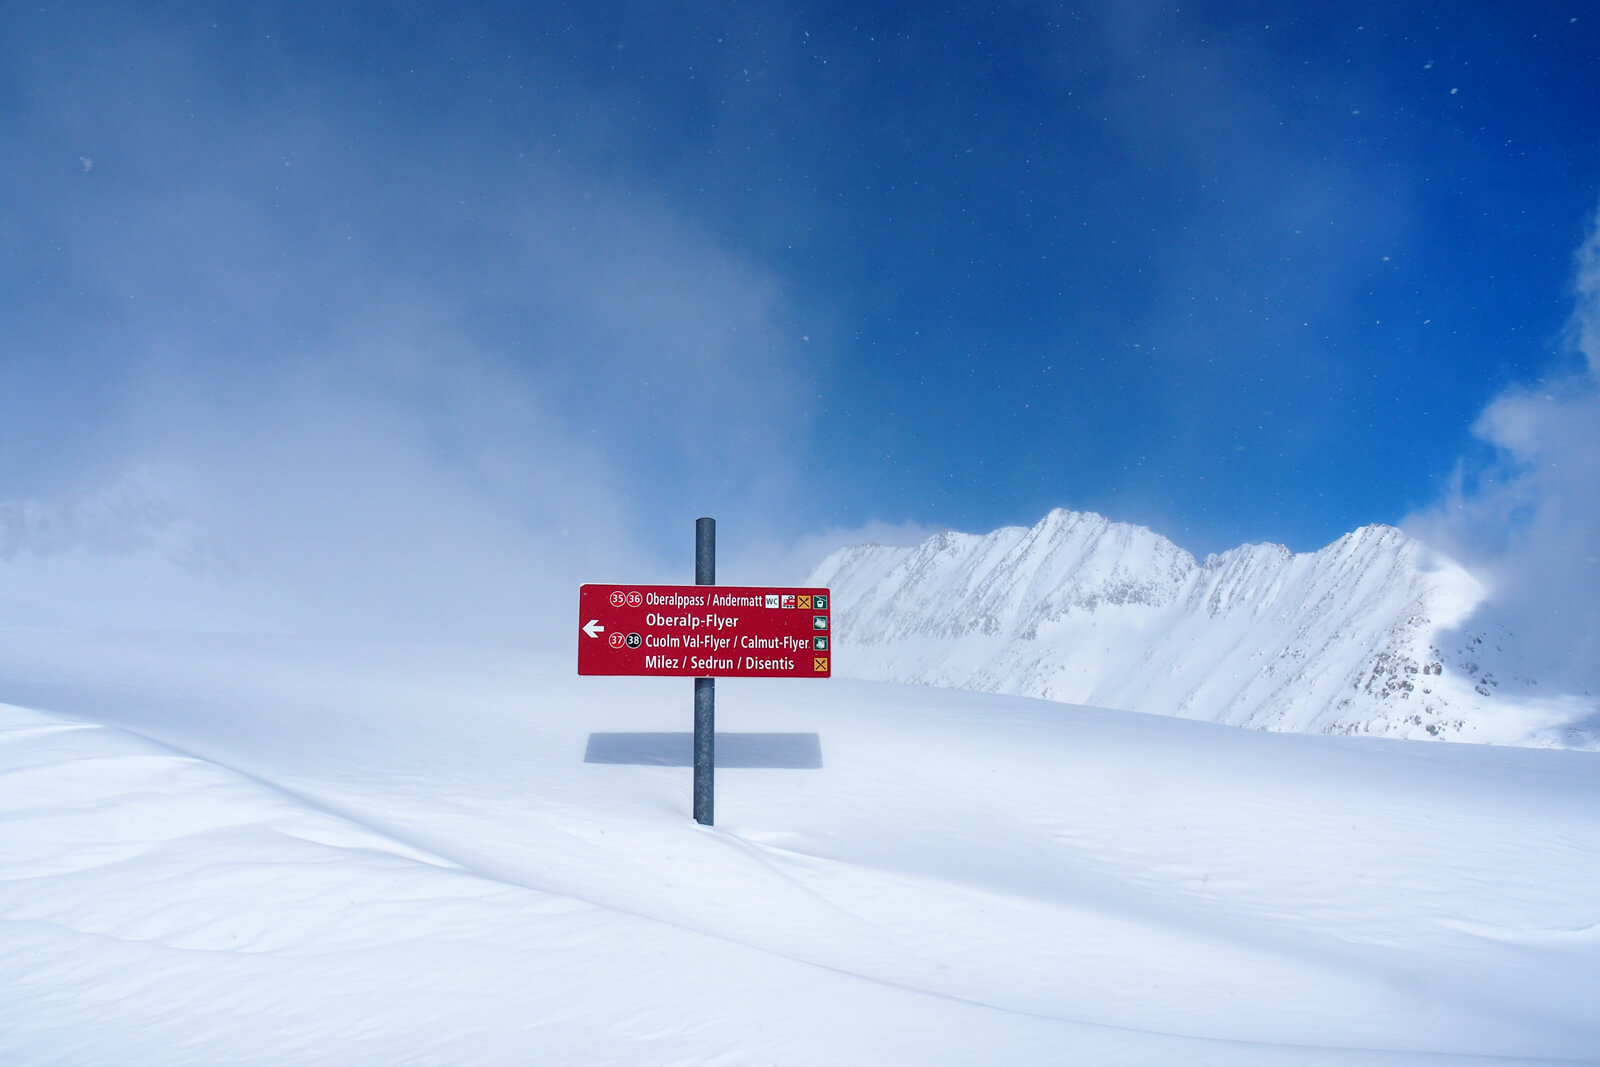 Andermatt Sedrun skiing area - AkiArena Andermatt Sedrun